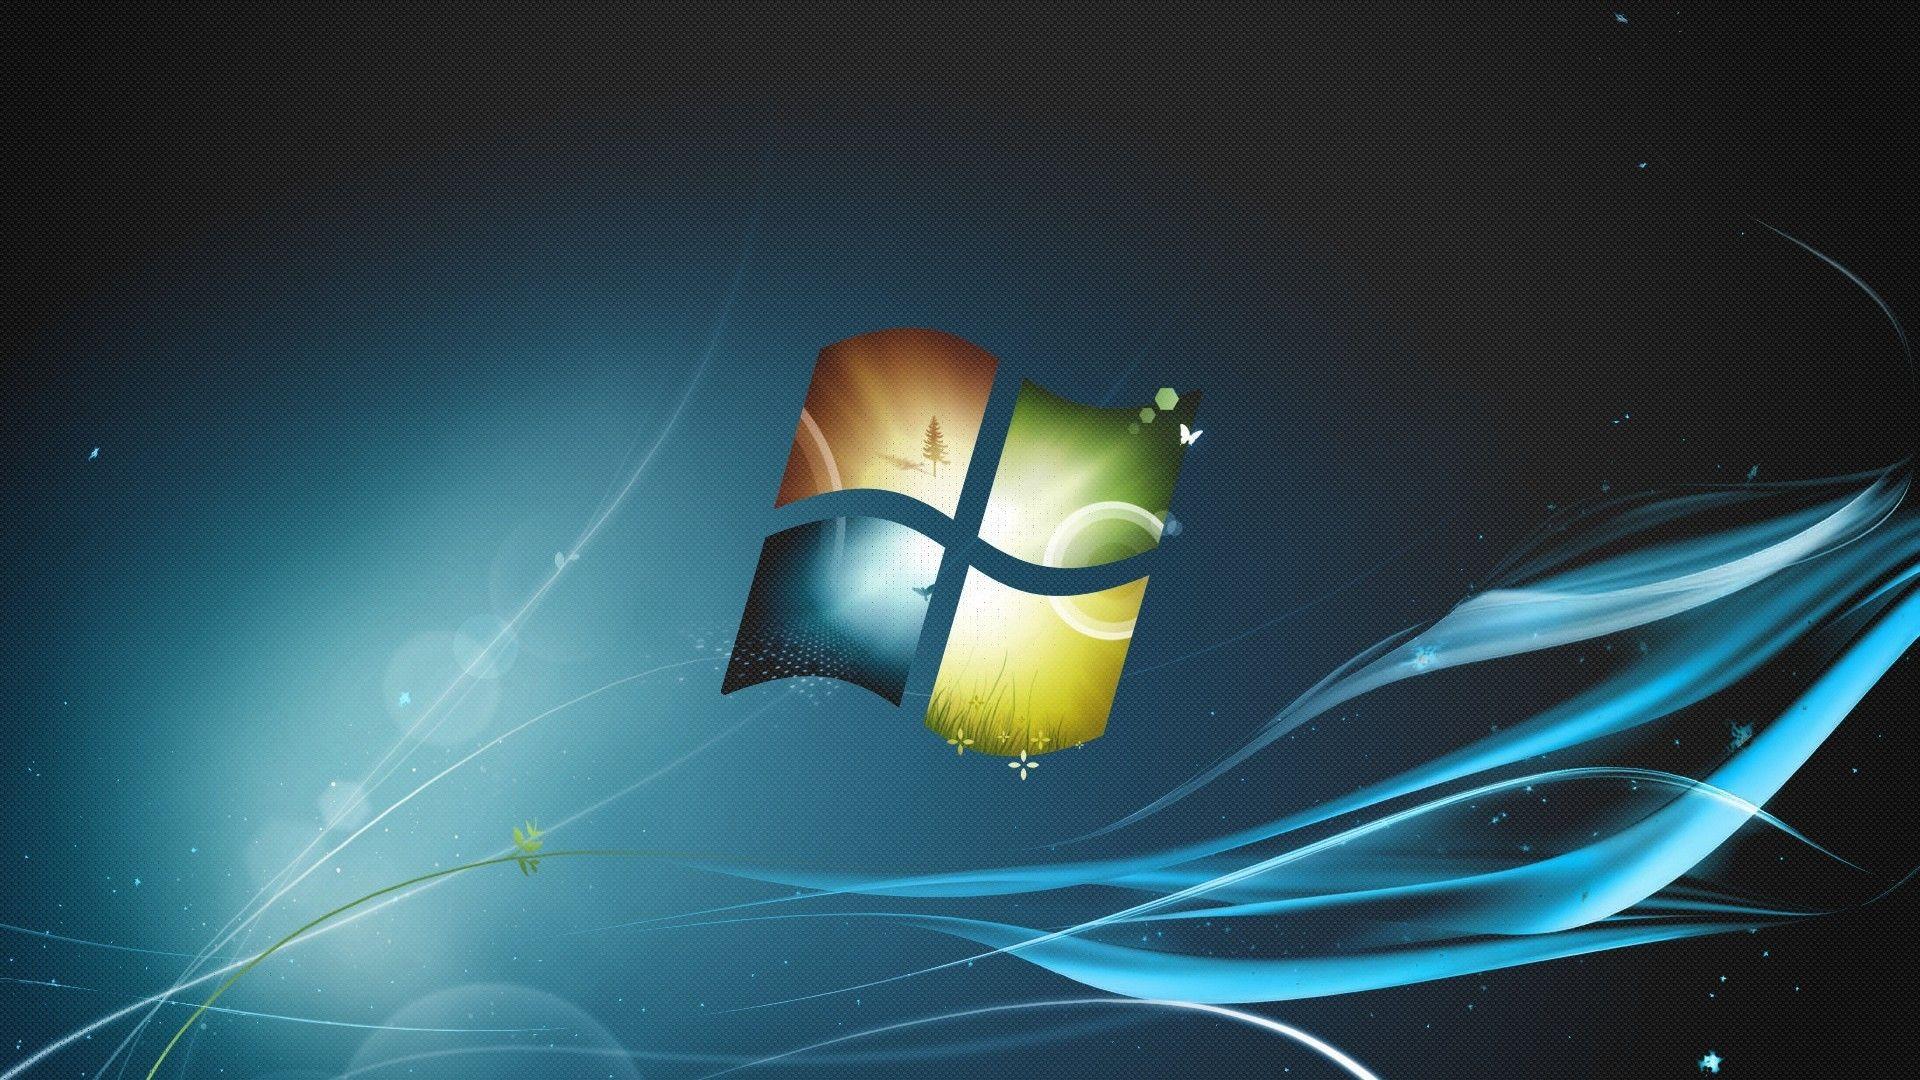 Microsoft Windows 7 Cool Background Wallpaper 1130